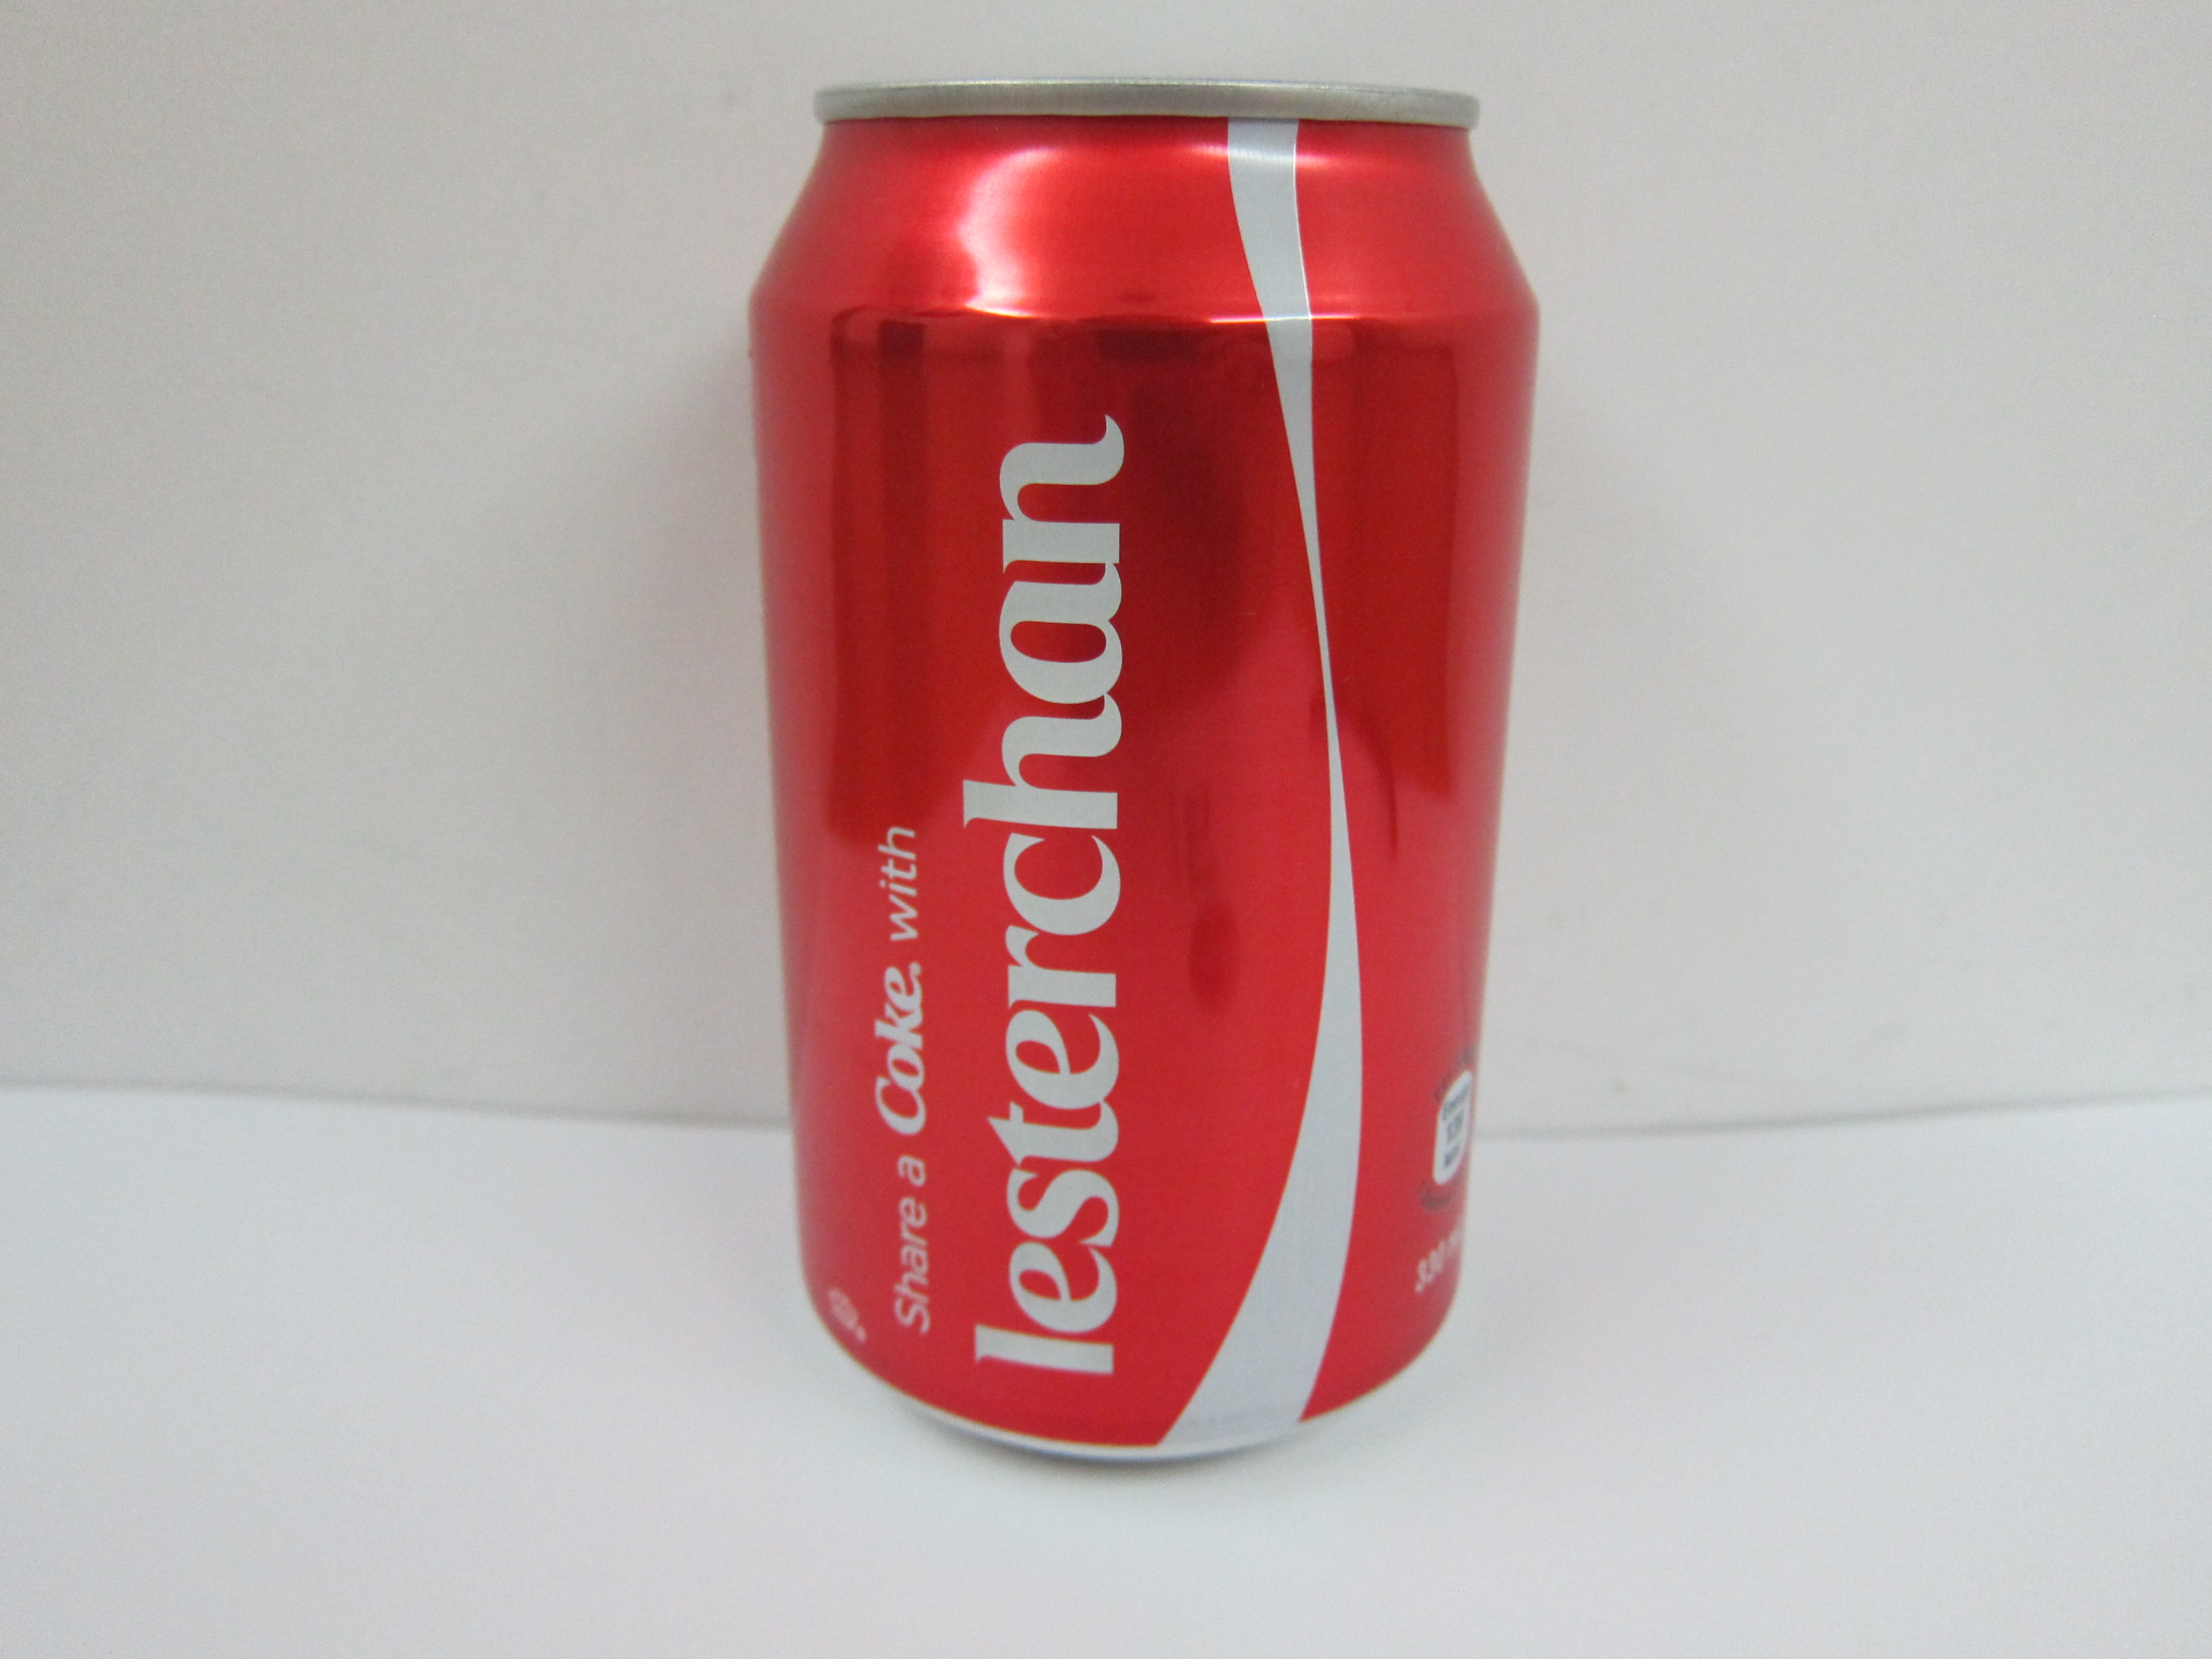 Personalized Coca-Cola (Coke) Can #ShareaCokeSG « Blog | lesterchan.net